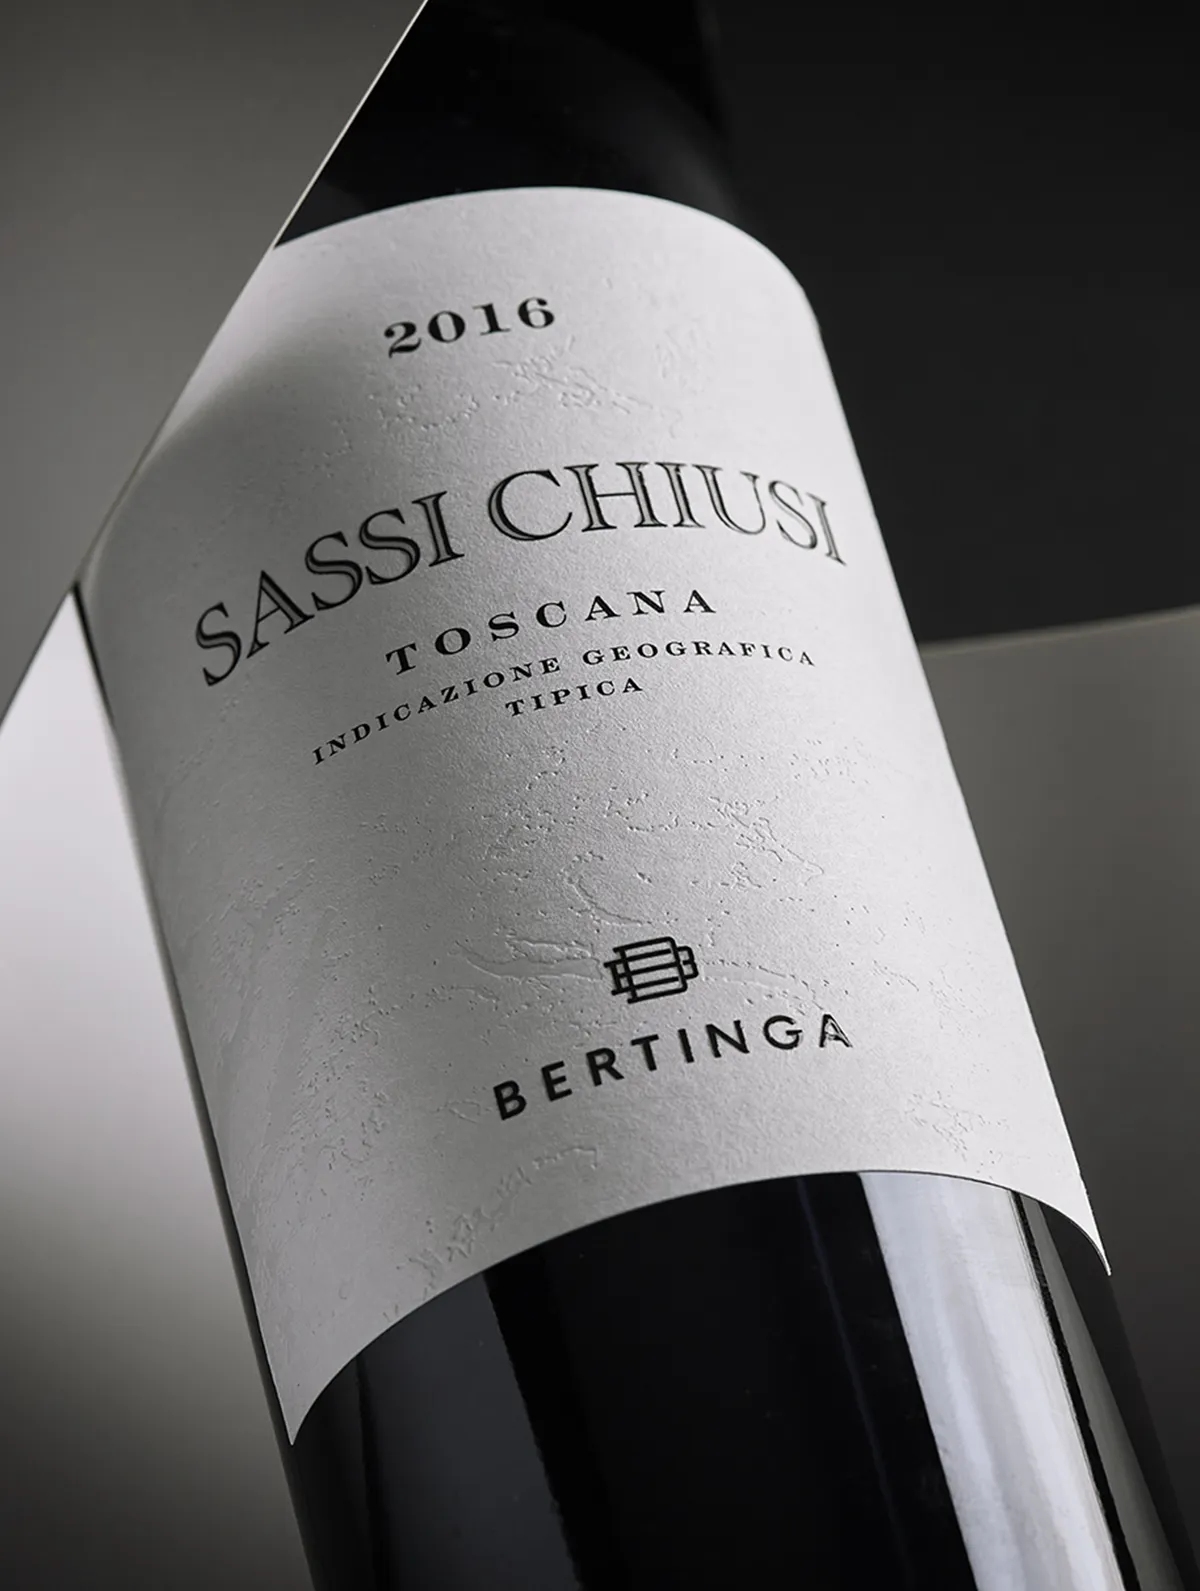 Bertinga - 我们设计了最好的标签，呈现真正的托斯卡纳葡萄酒。 - By HDG